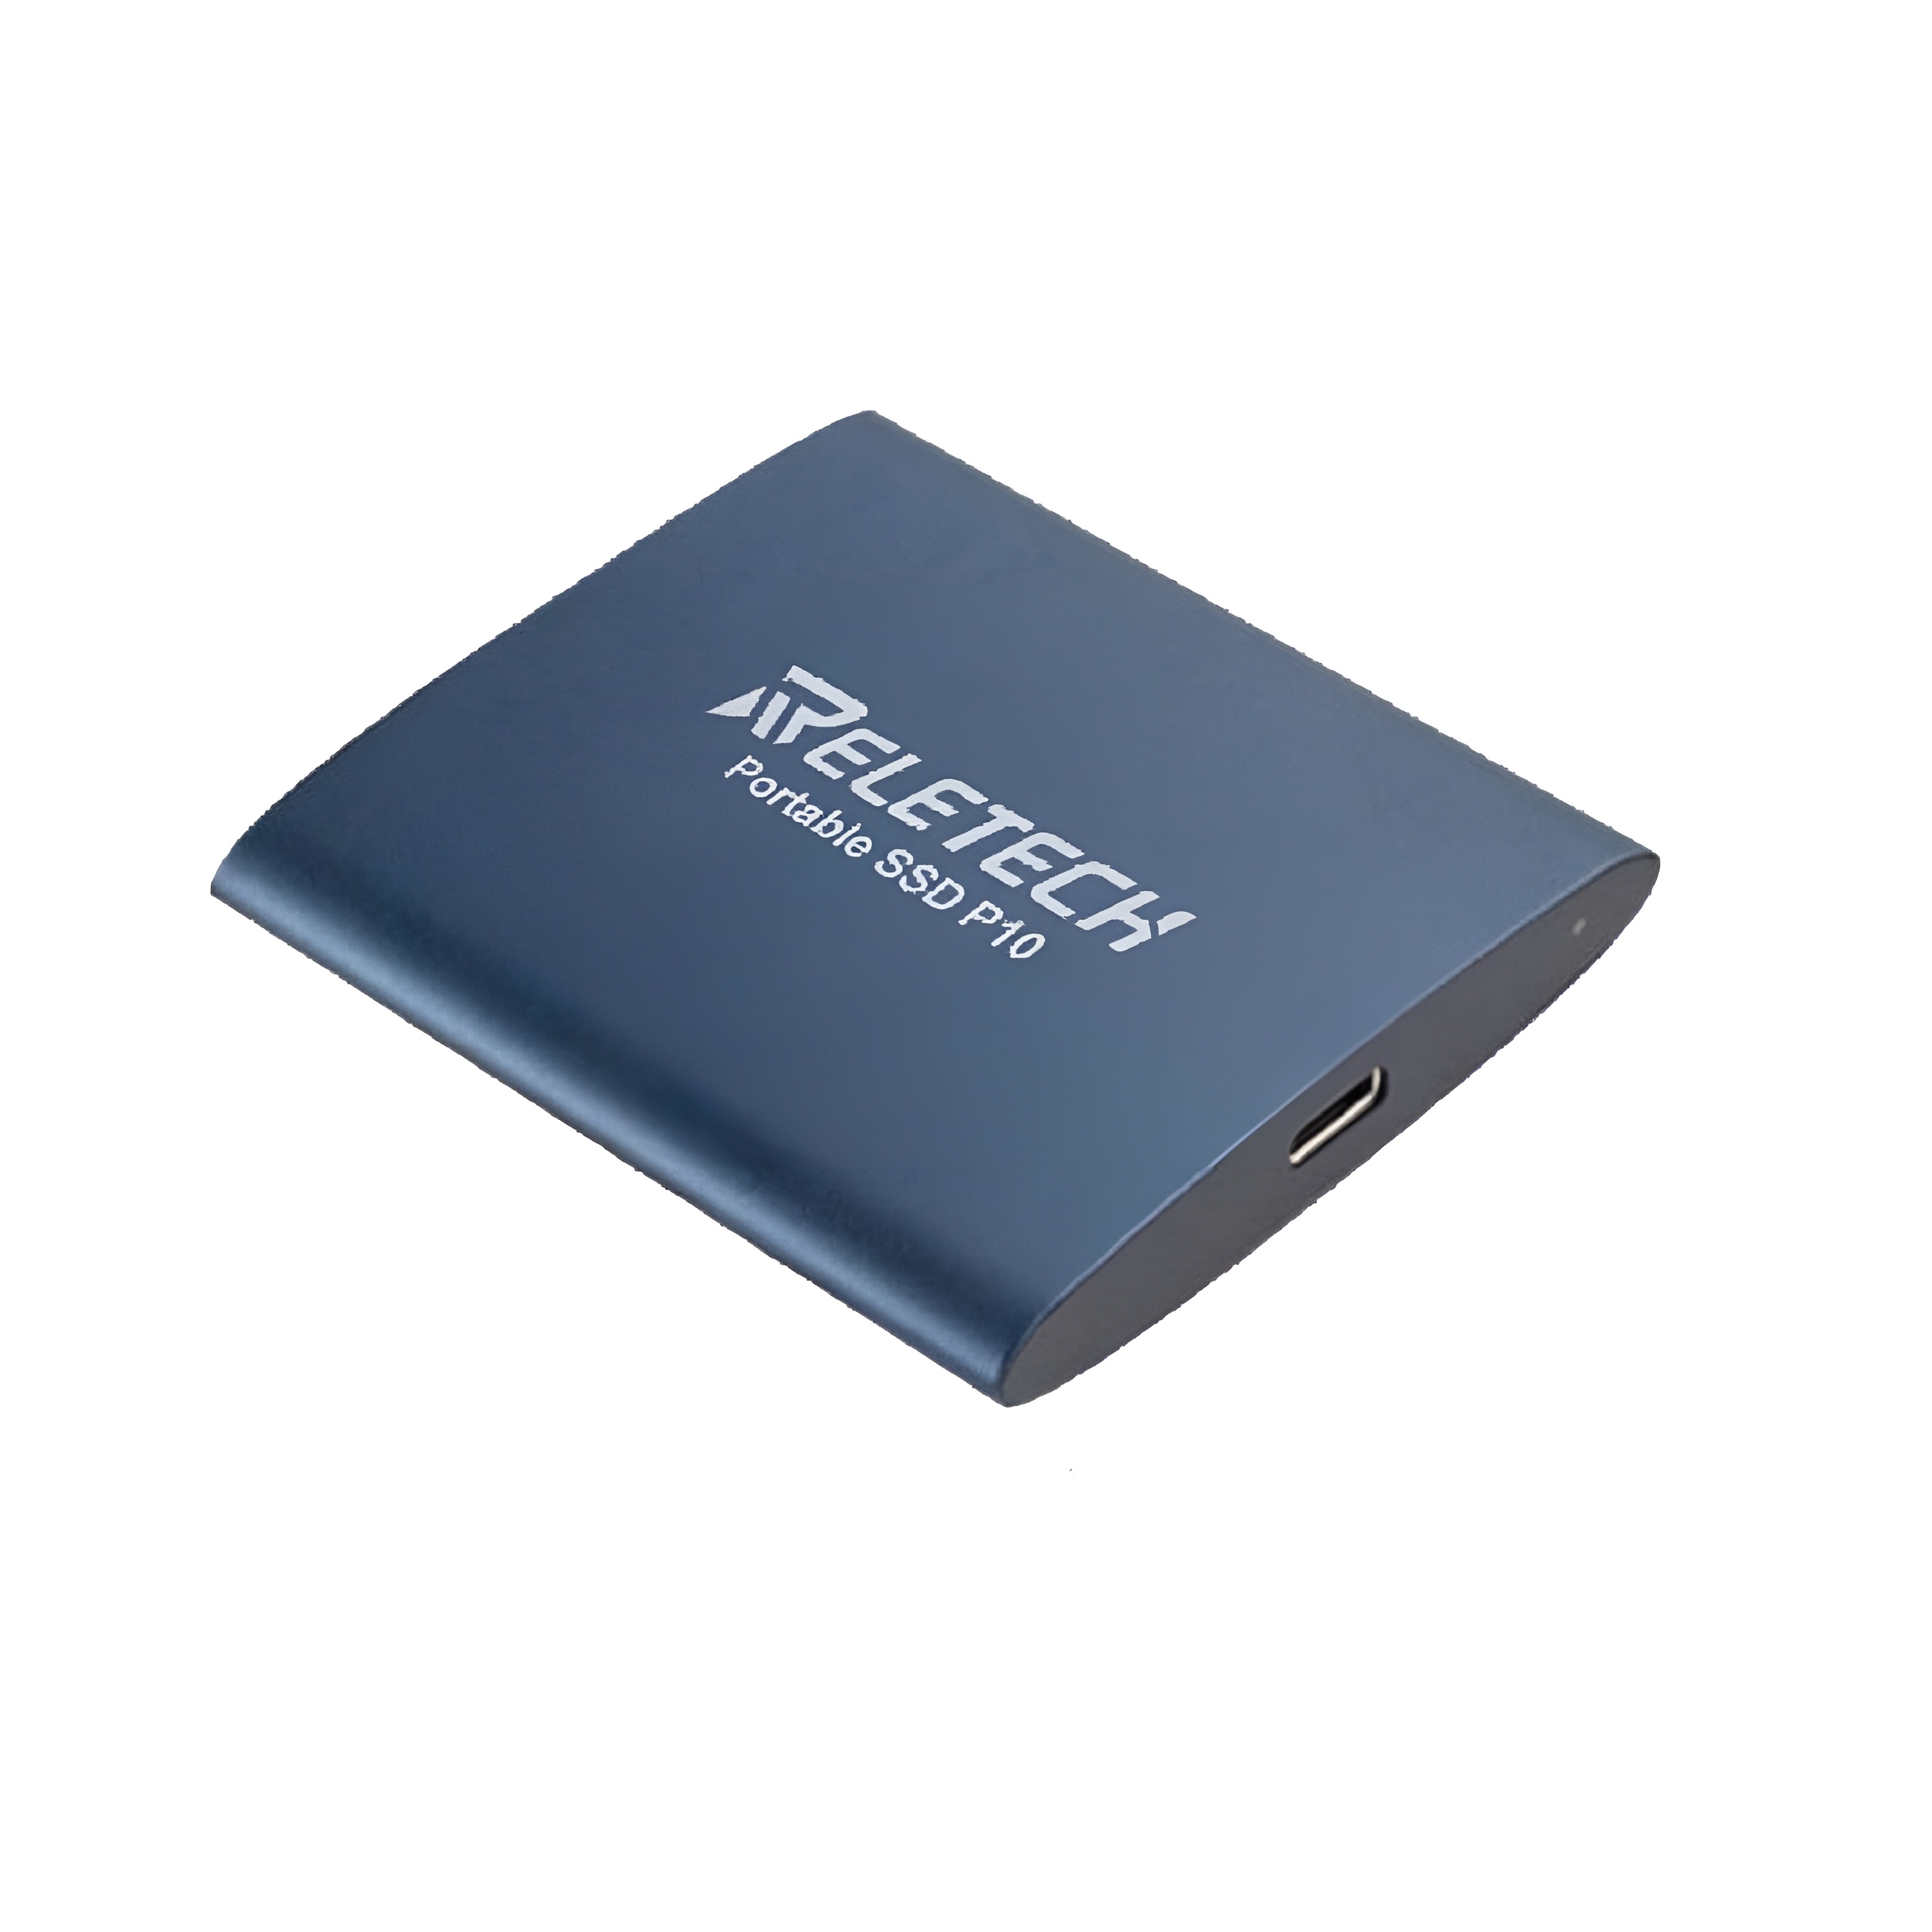 Фото — SSD Reletech P10 portable SSD 2TB, синий